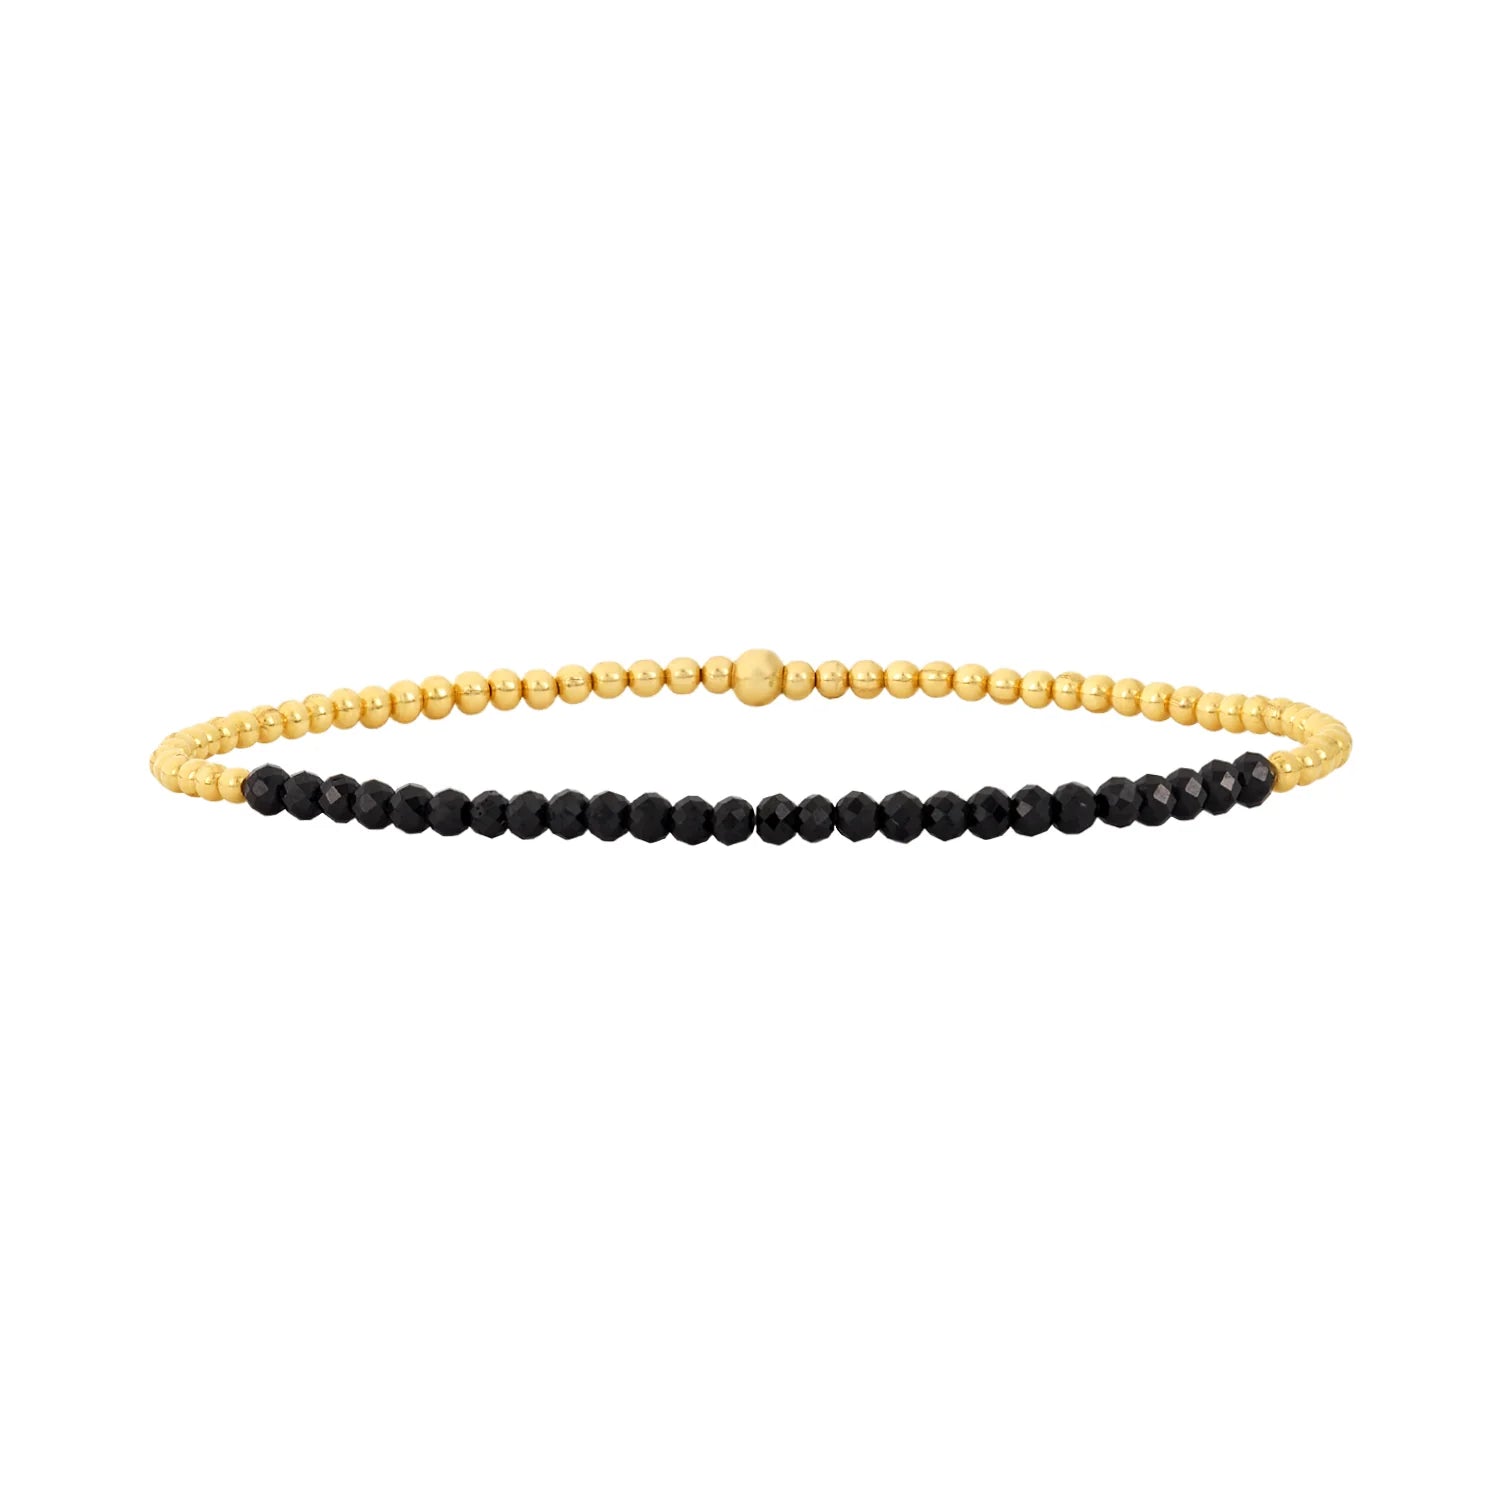 2mm Black Spinel Gemstone Beaded Bracelet